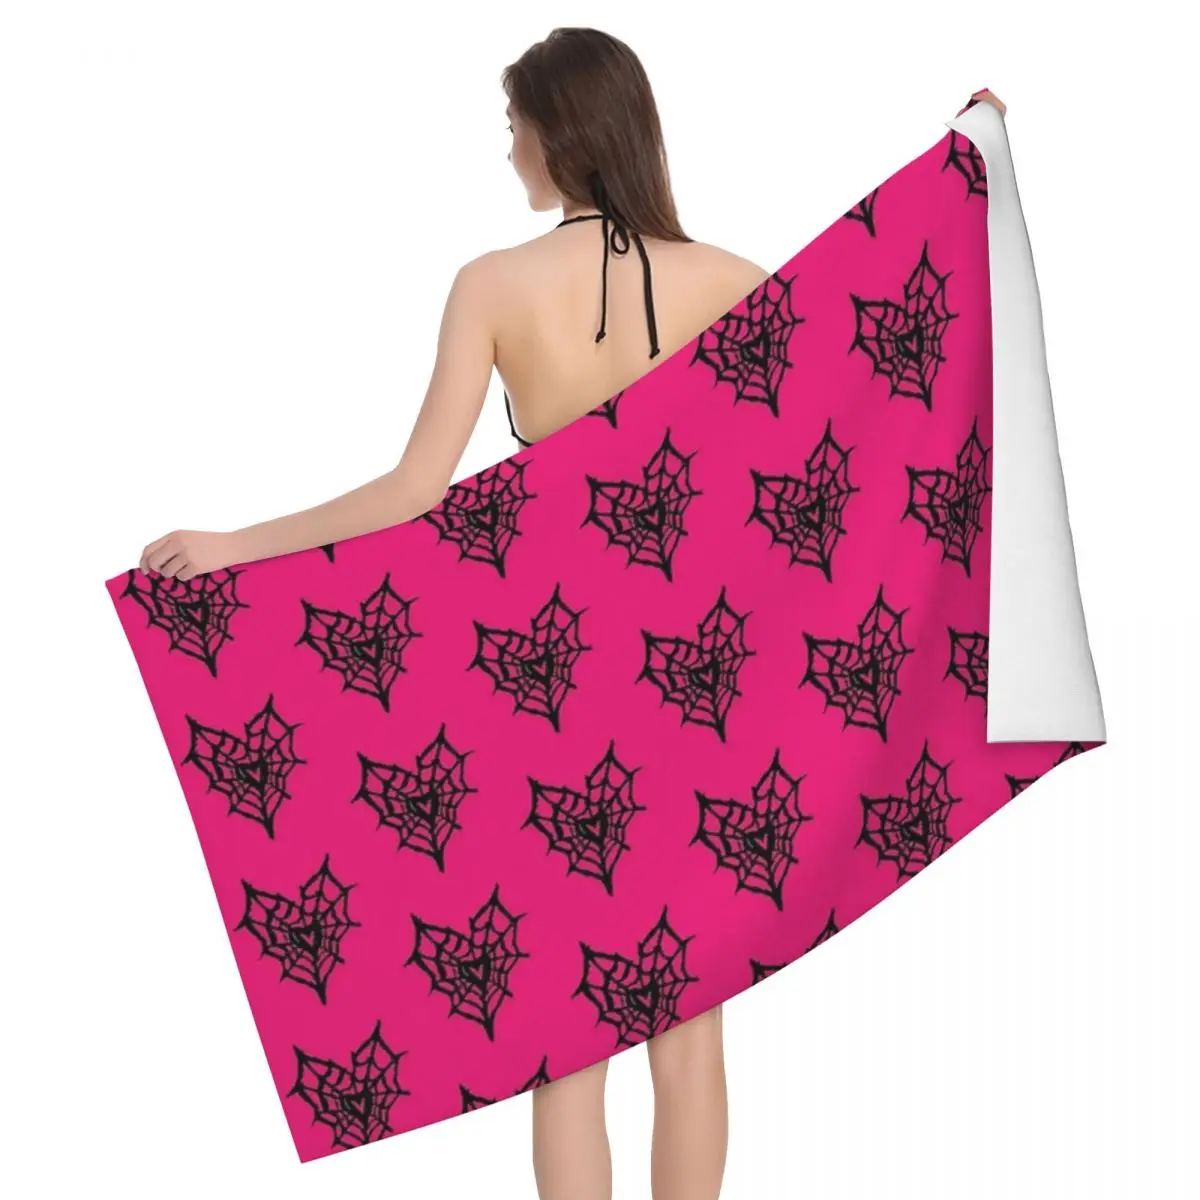 

Spiderweb Heart 80x130cm Bath Towel Brightly Printed For Picnic Towel Wedding Gift